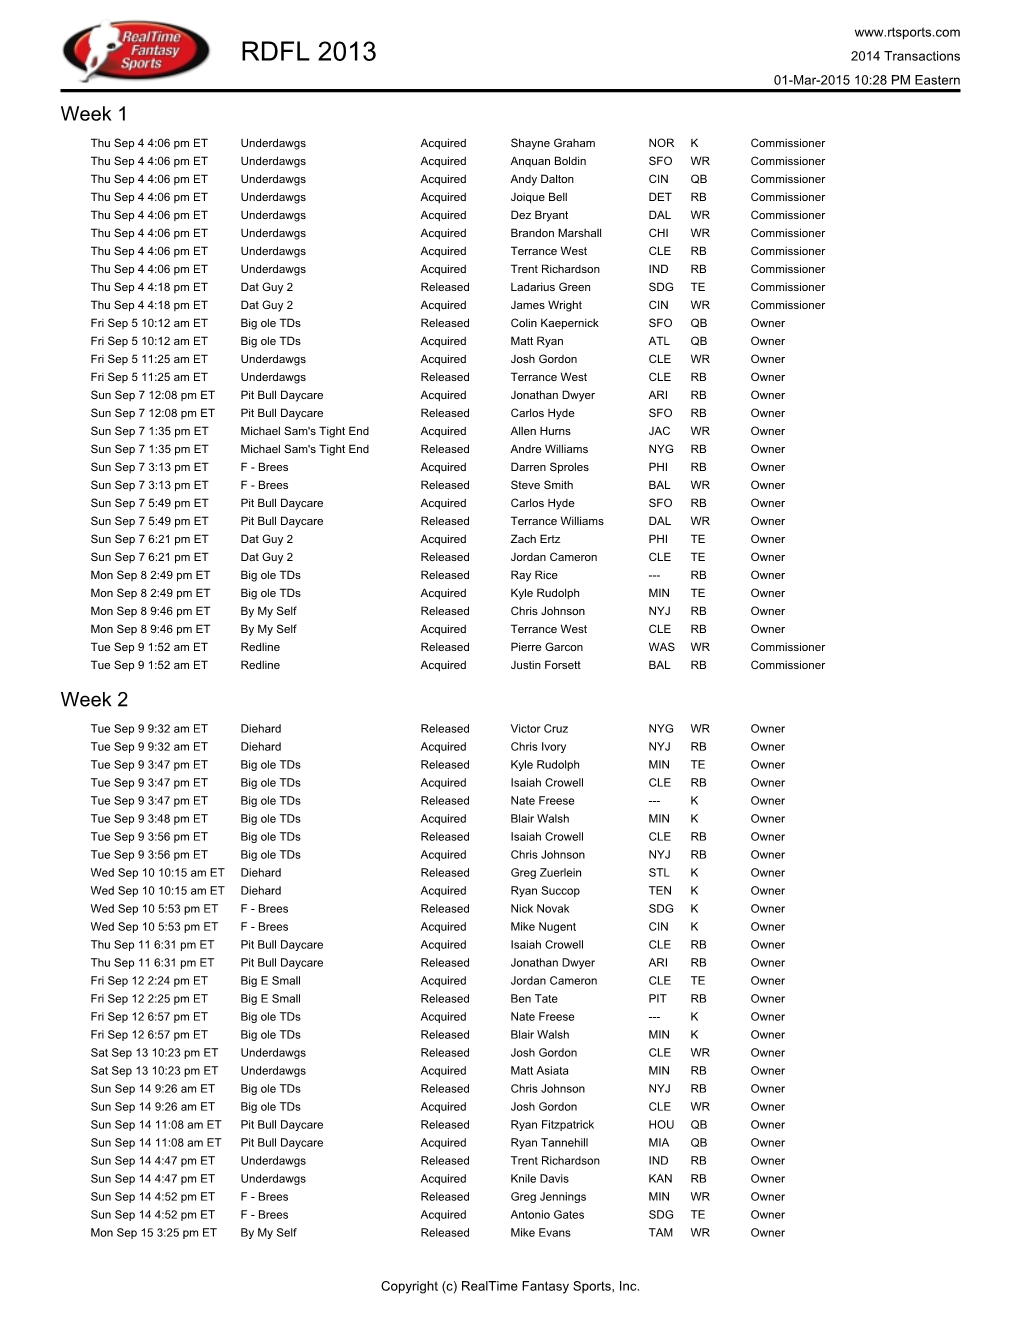 RDFL 2013 2014 Transactions 01-Mar-2015 10:28 PM Eastern Week 1